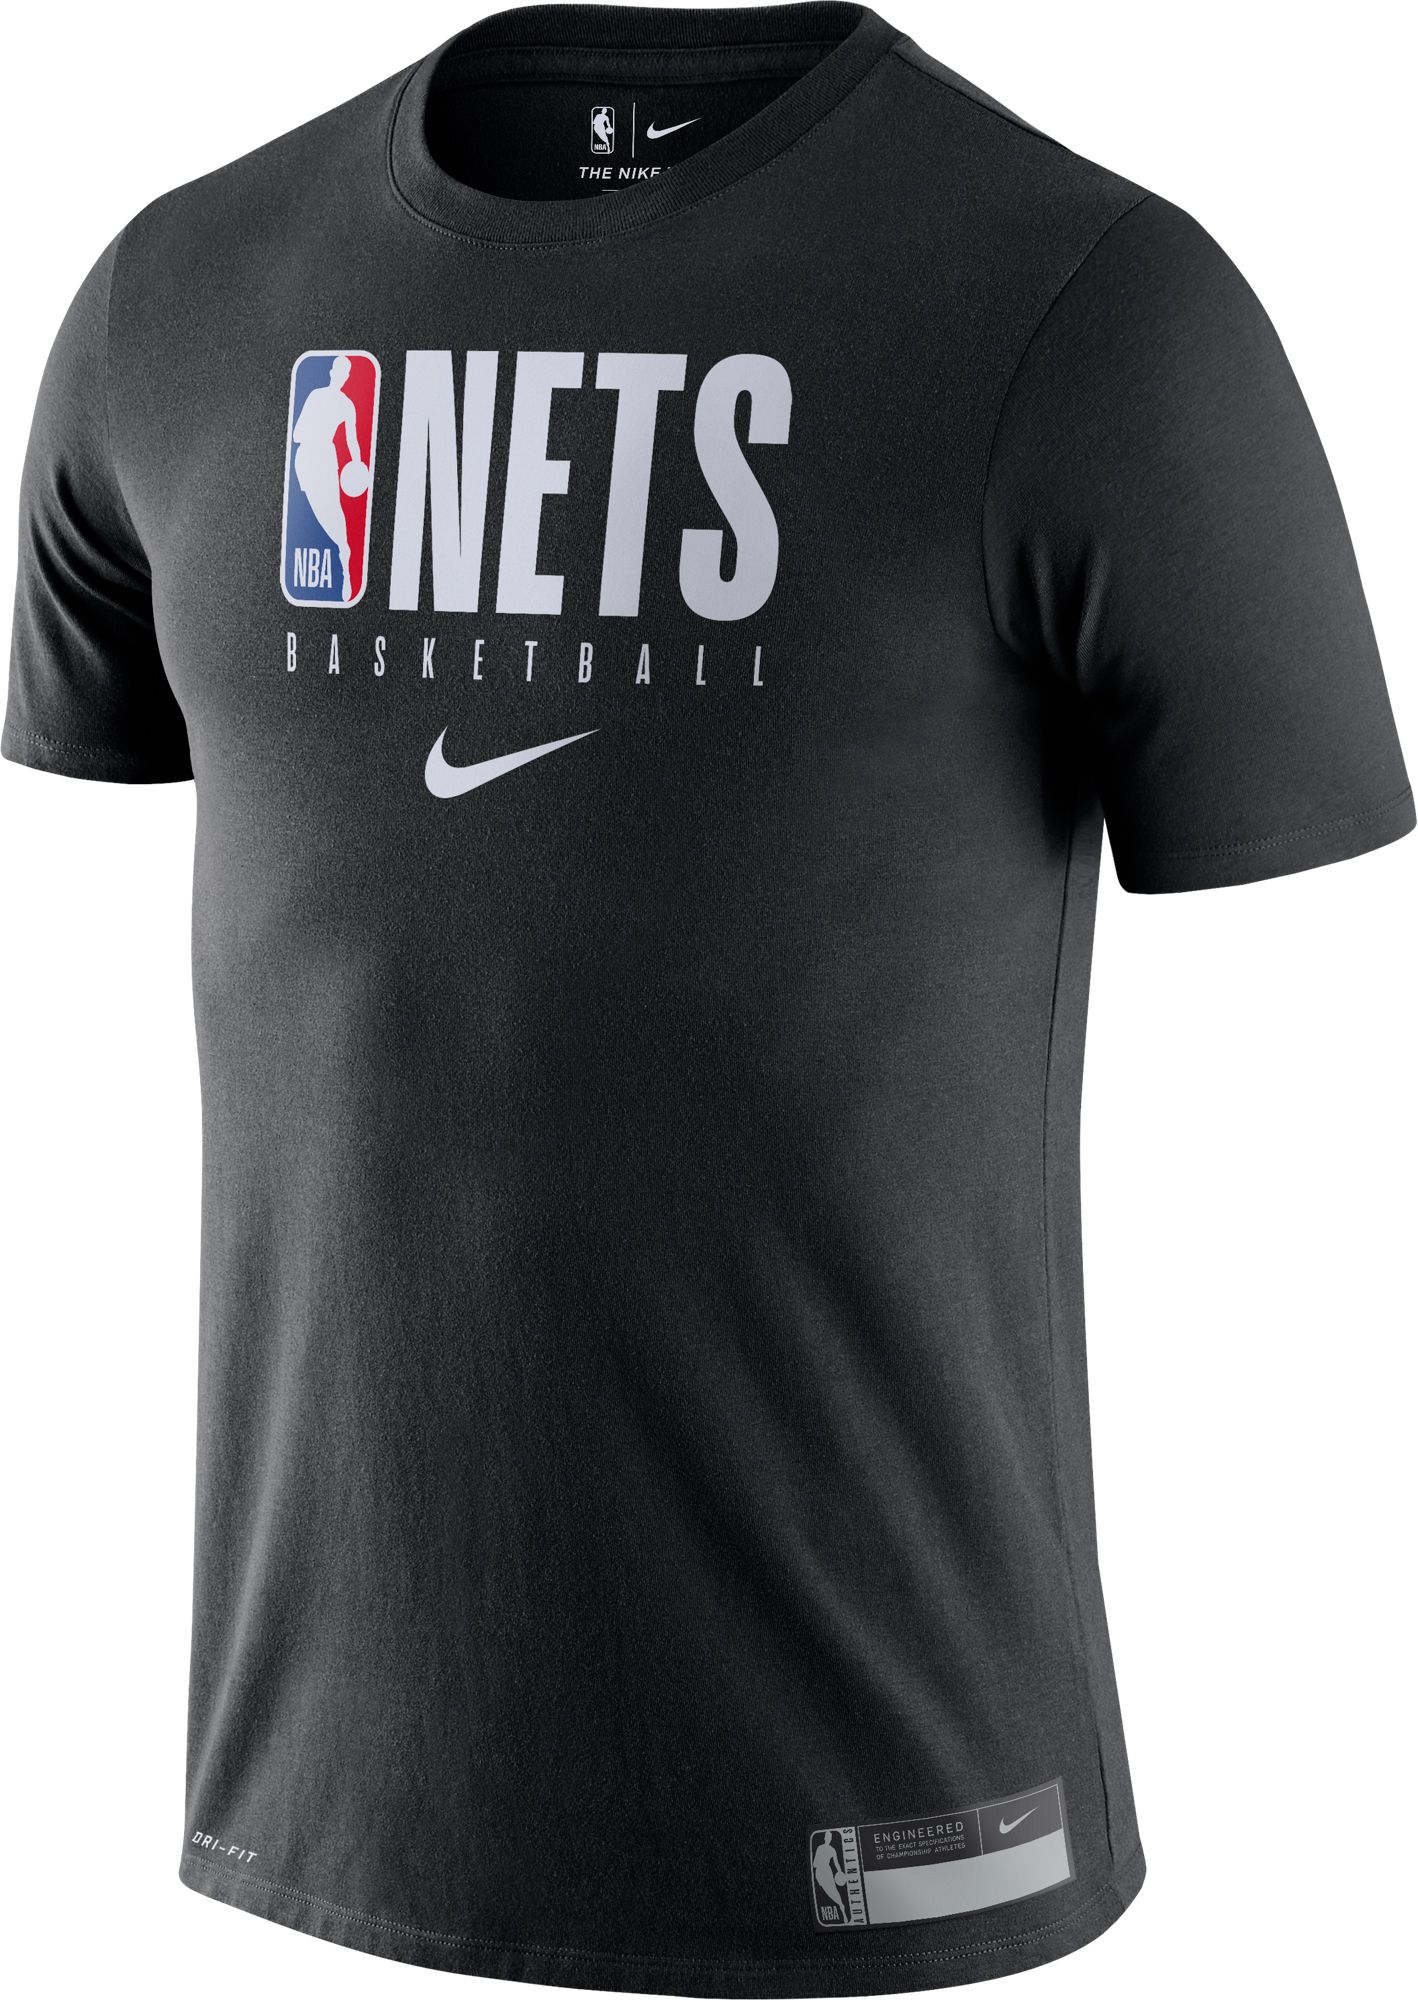 brooklyn nets practice shirt